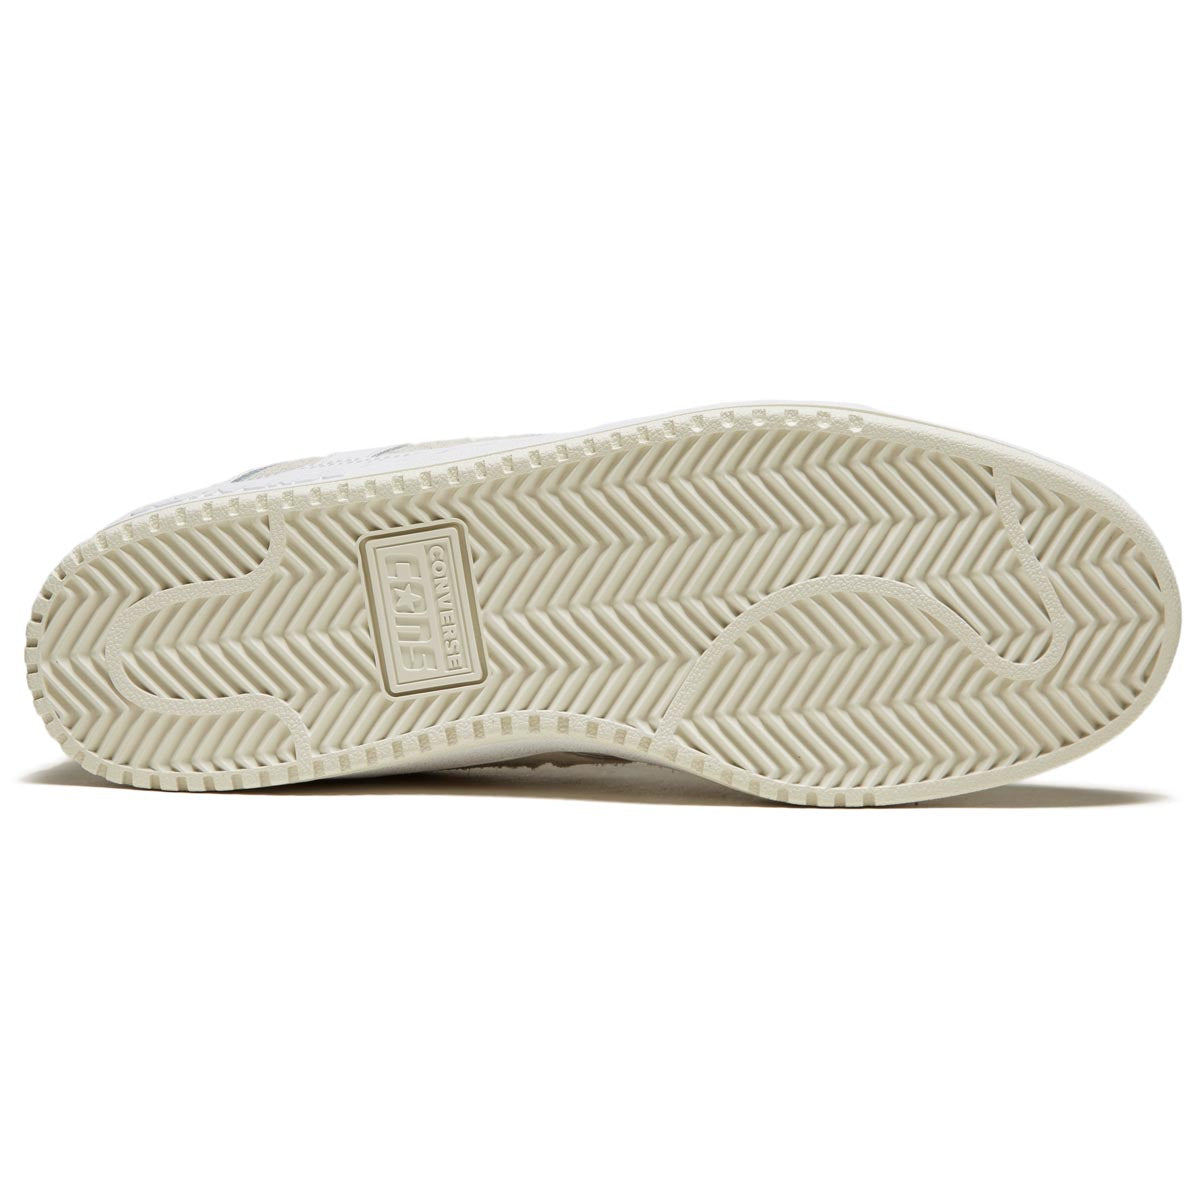 Converse AS-1 Pro Shoes - White/Vaporous Gray/White image 4